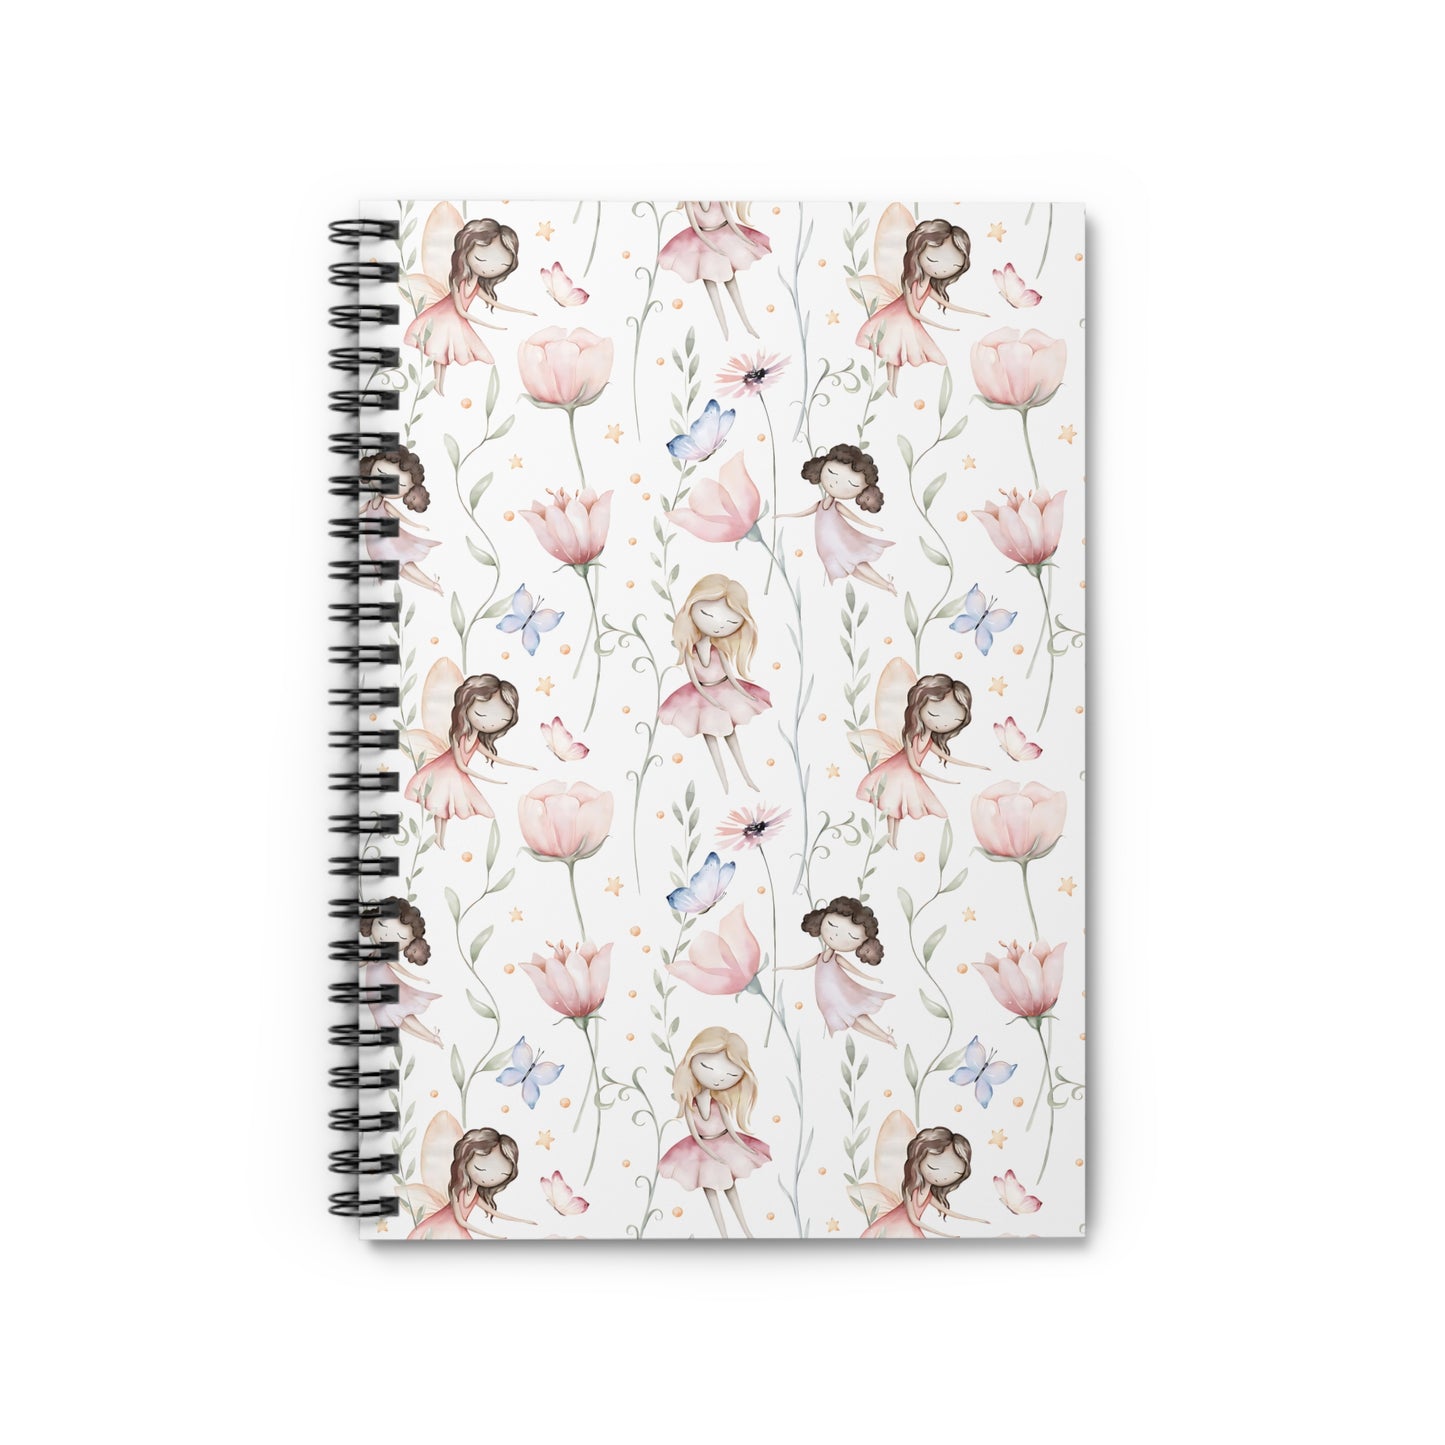 Sleepy Fairy Spiral Notebook - Ruled Line